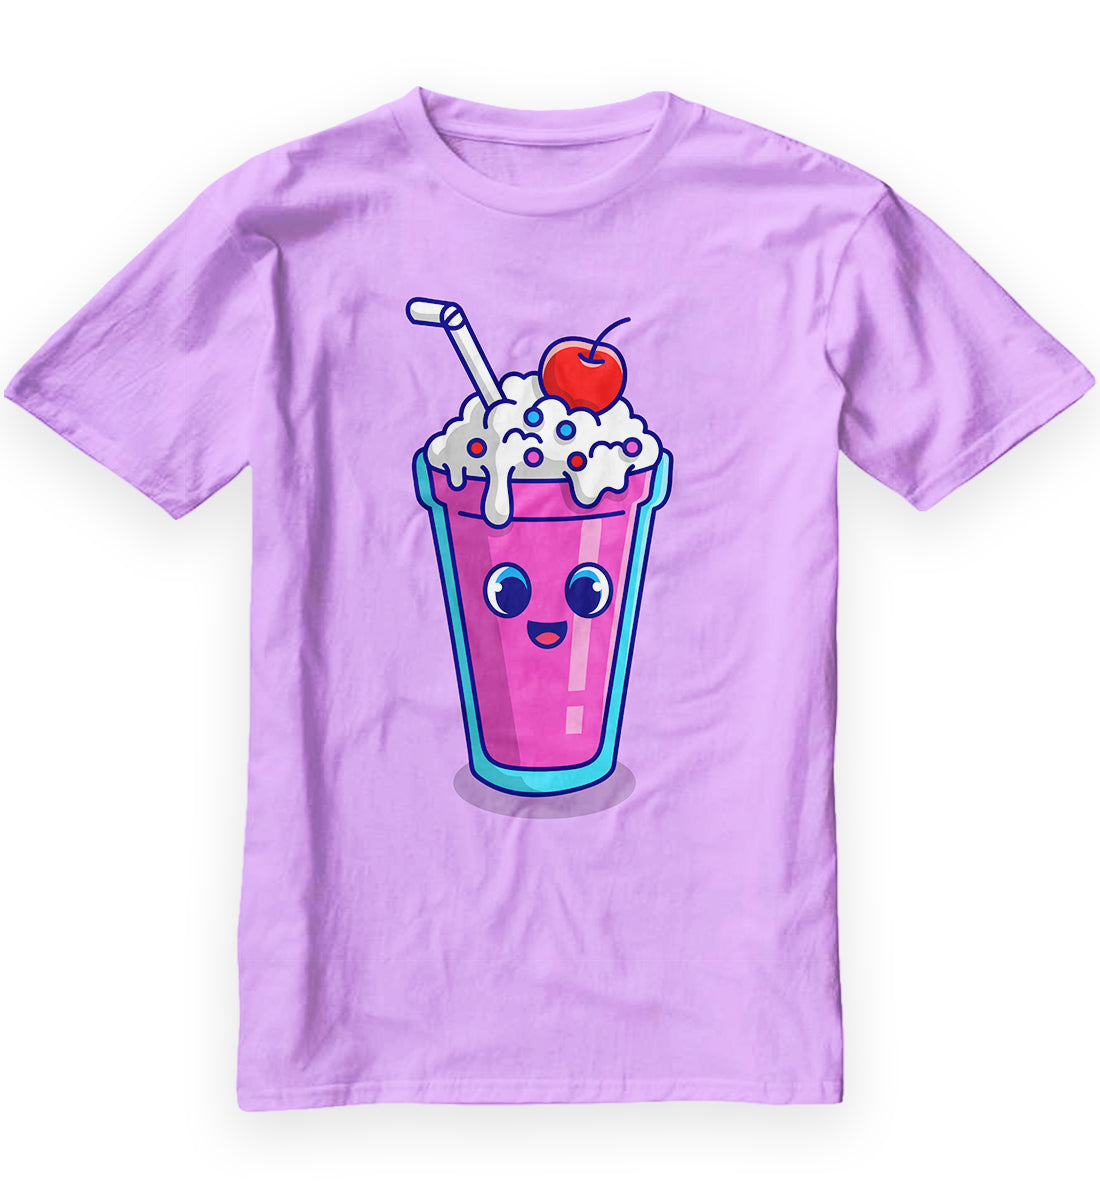 Cherry Smoothie Girl Shirt